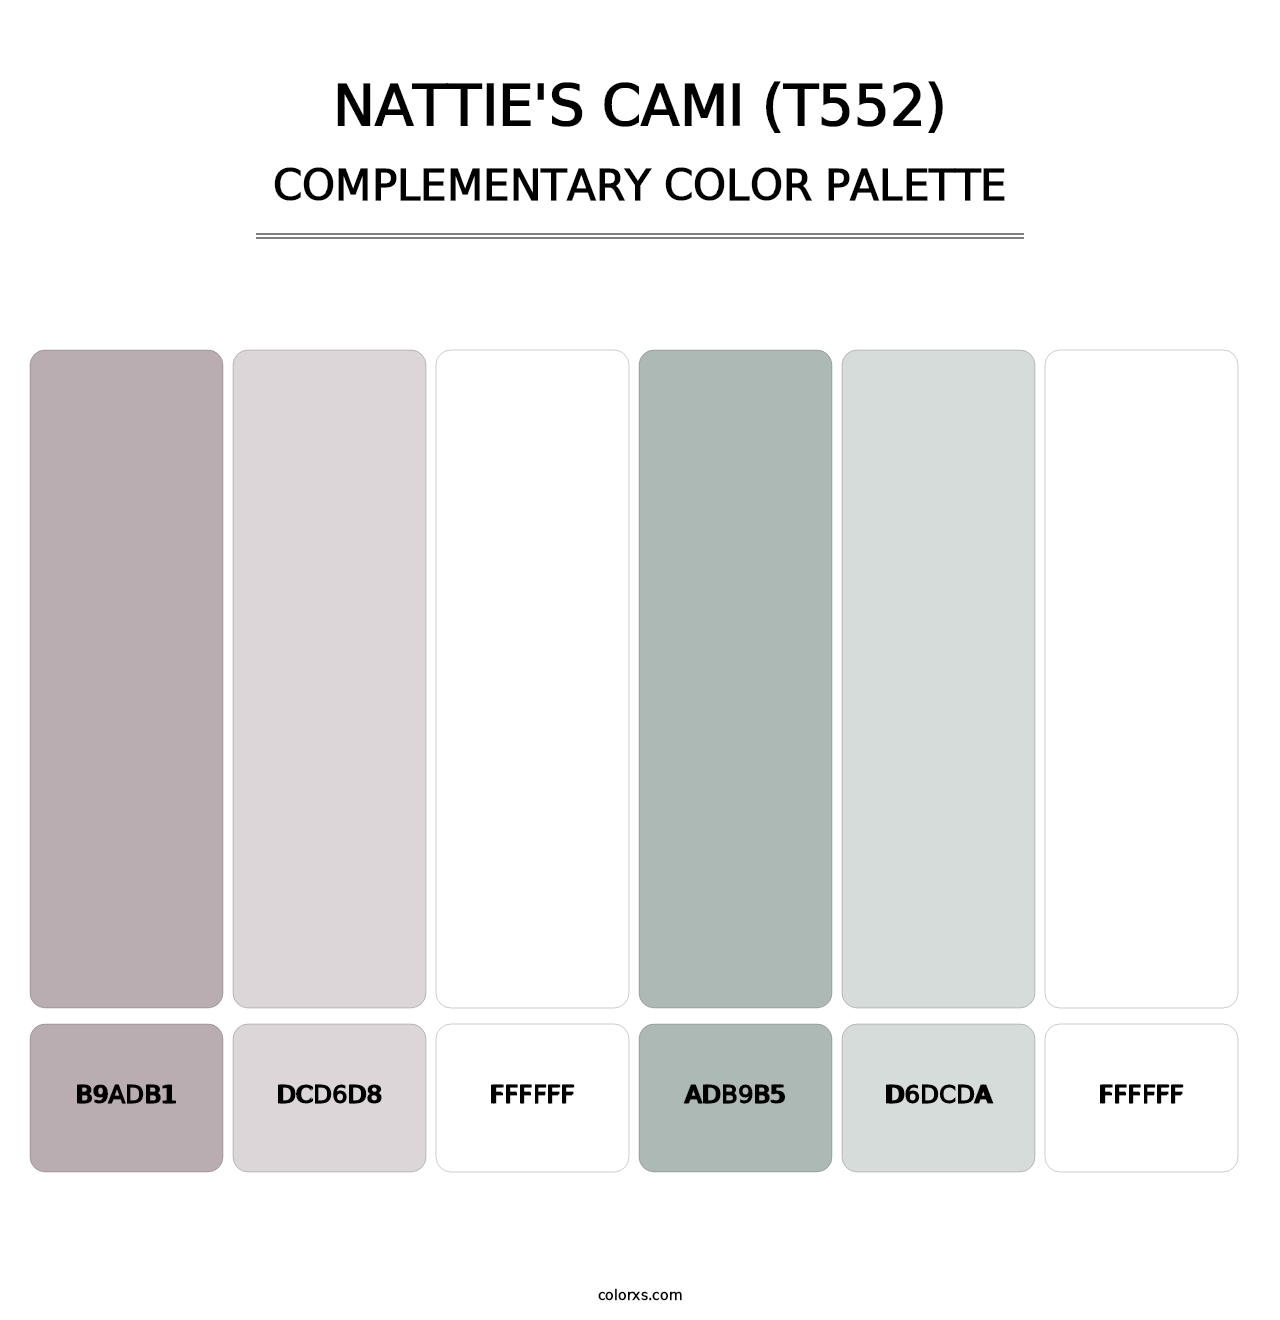 Nattie's Cami (T552) - Complementary Color Palette